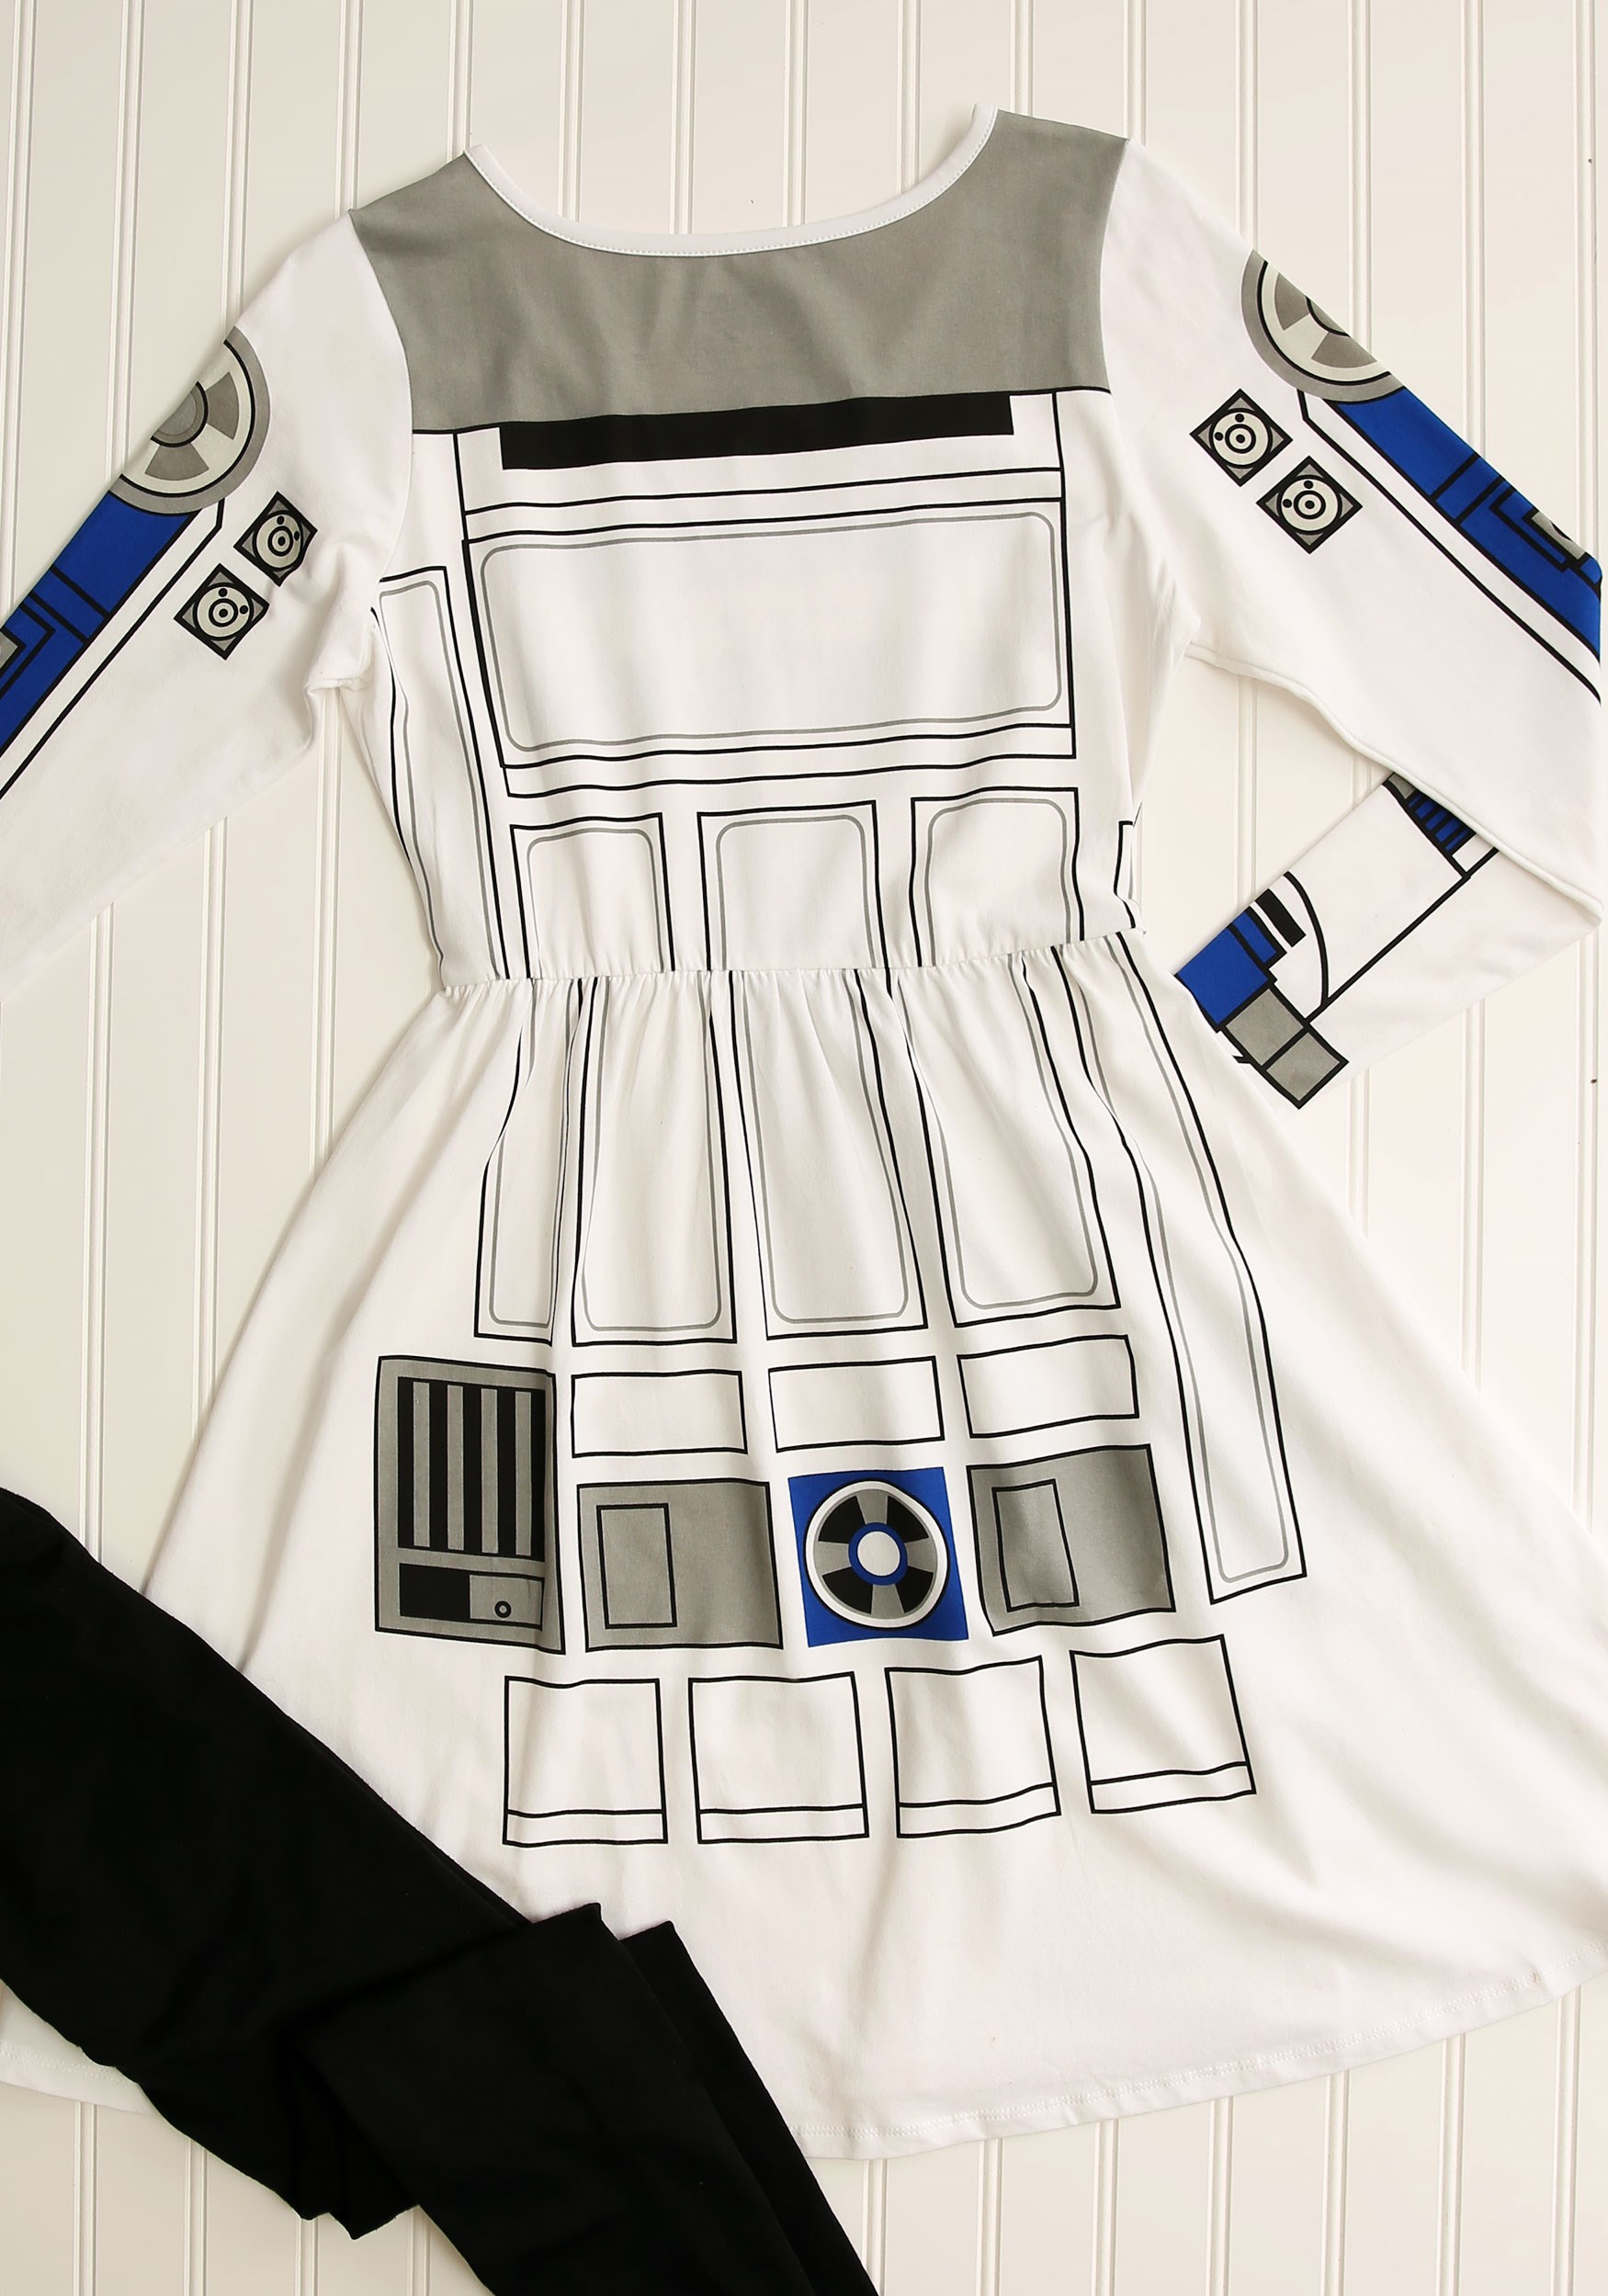 Star Wars I Am R2D2 Skater Dress For Womens Fancy Dress Costume